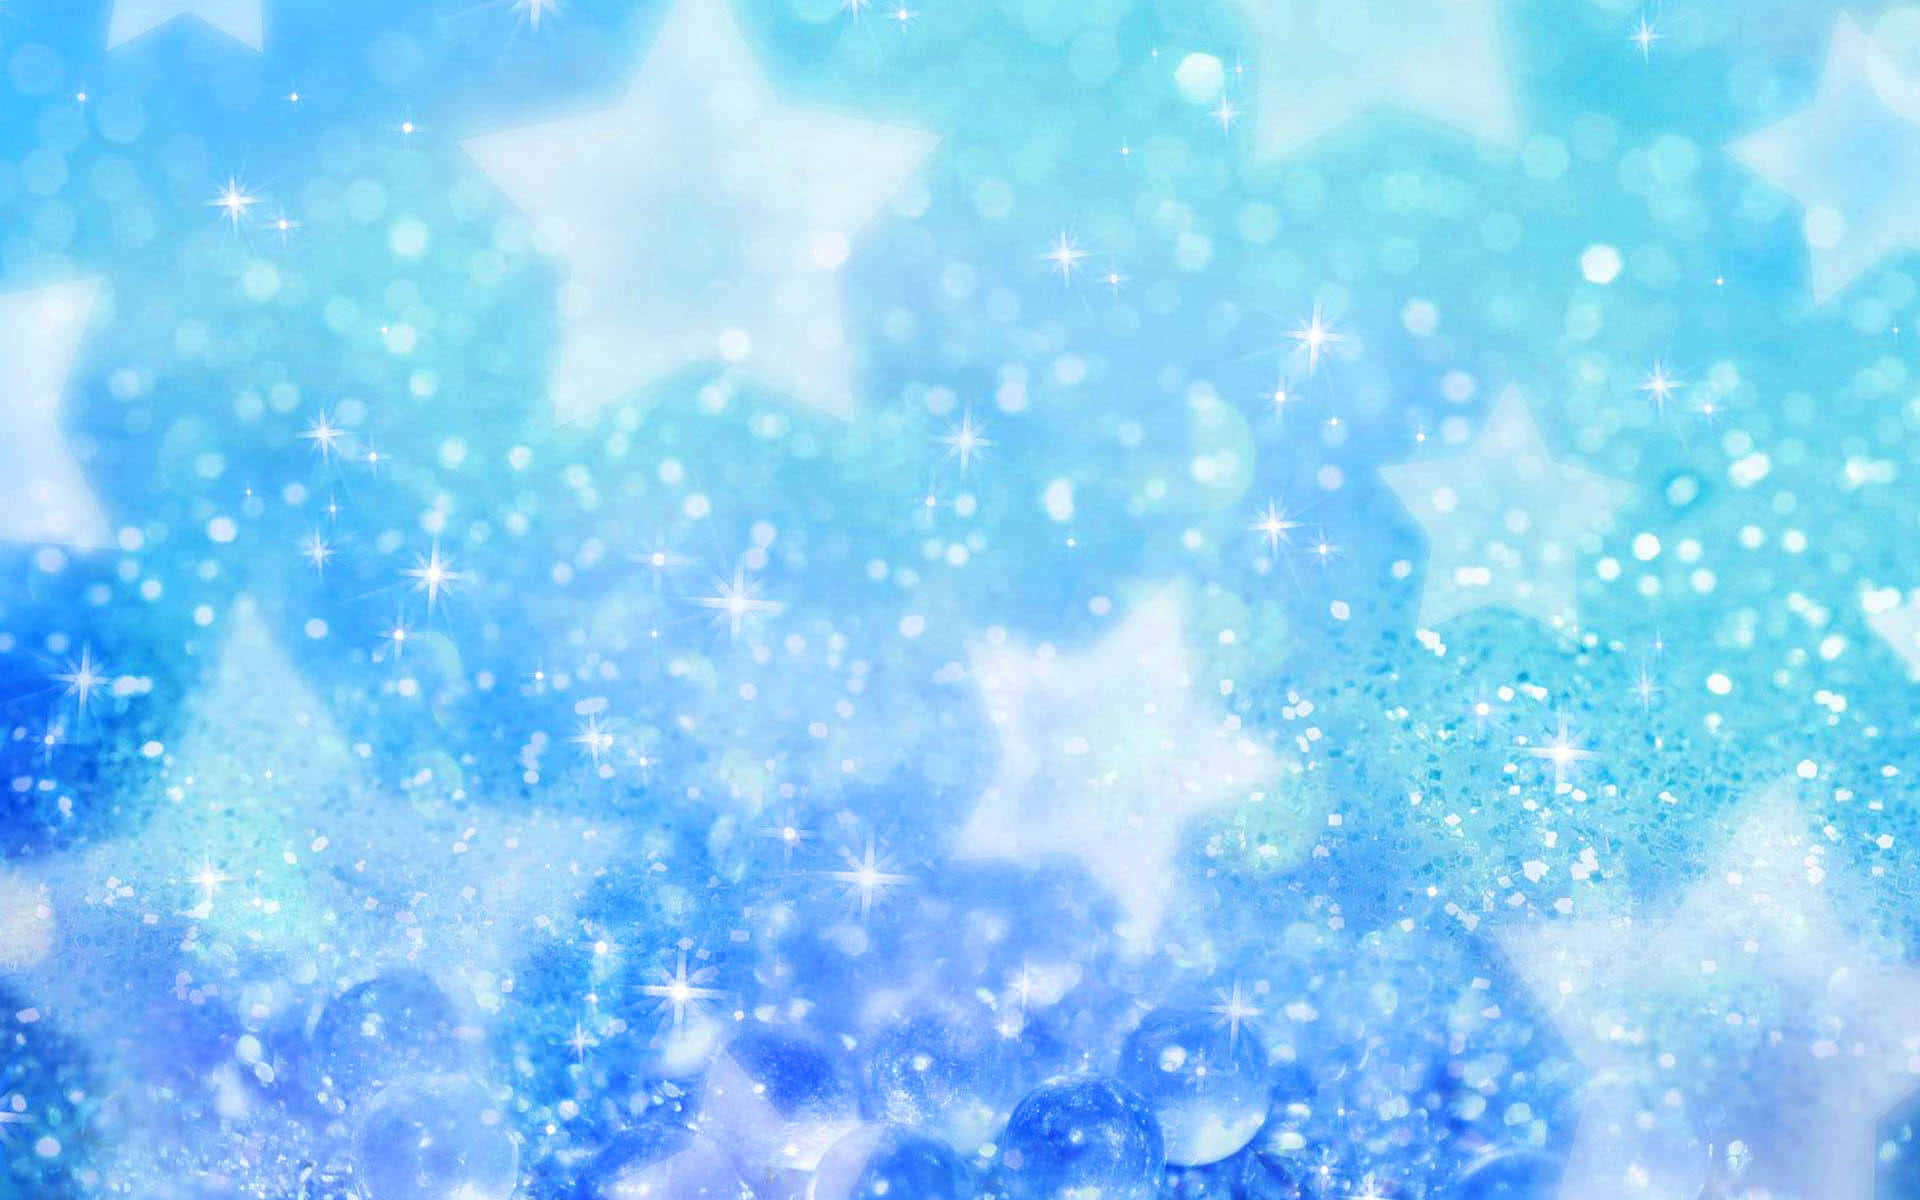 Det stjerneklare blå, højopløselige glitterbaggrund